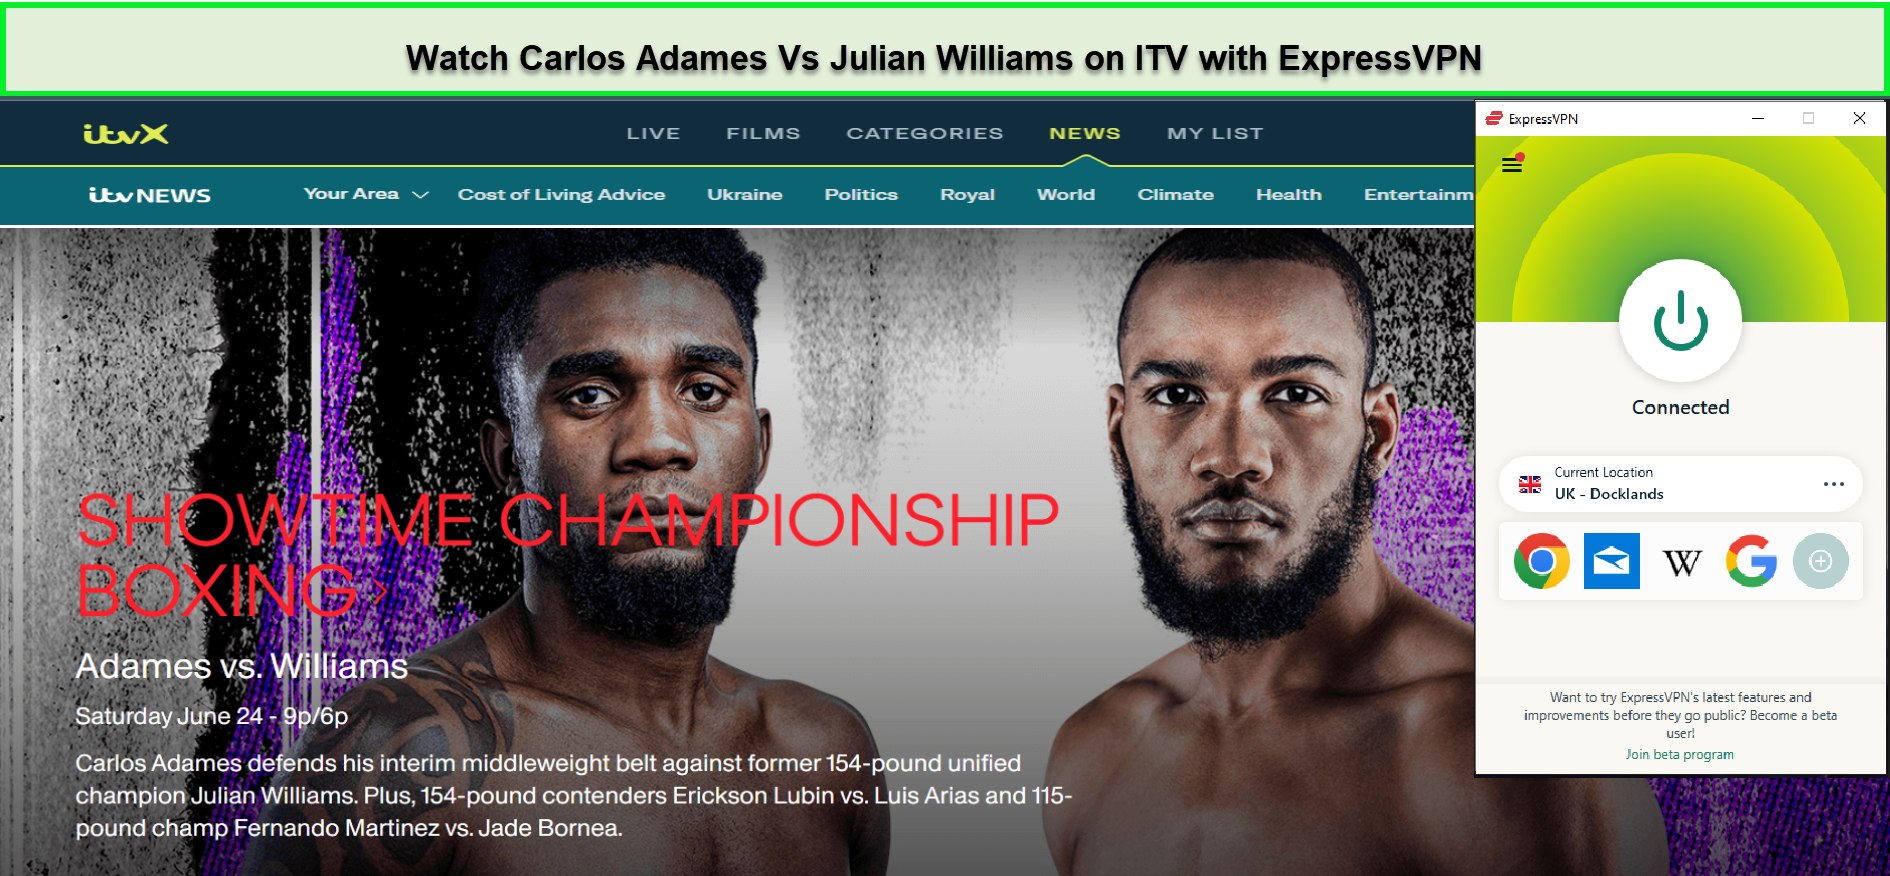 Watch-Carlos-Adames-Vs-Julian-Williams-in-Italy-on-ITV-with-ExpressVPN